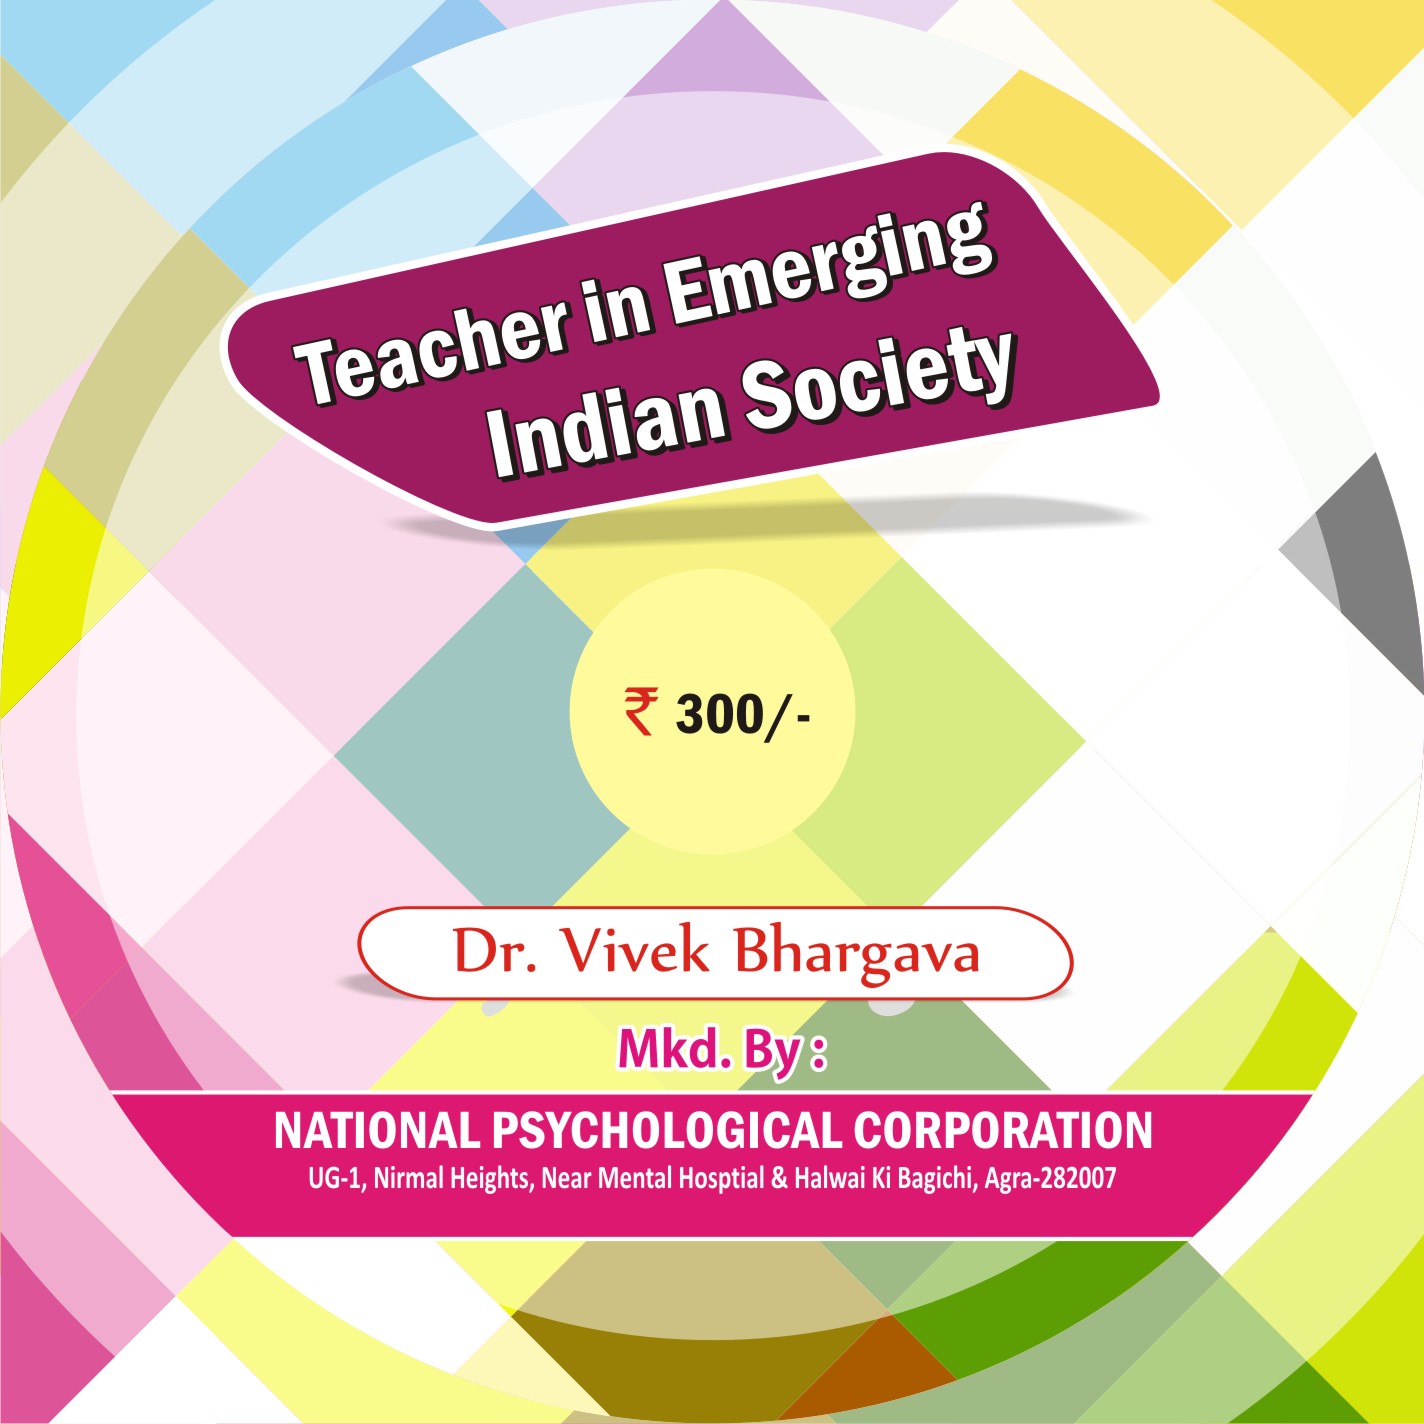 TEACHER-IN-EMERGING-INDIAN-SOCIETY